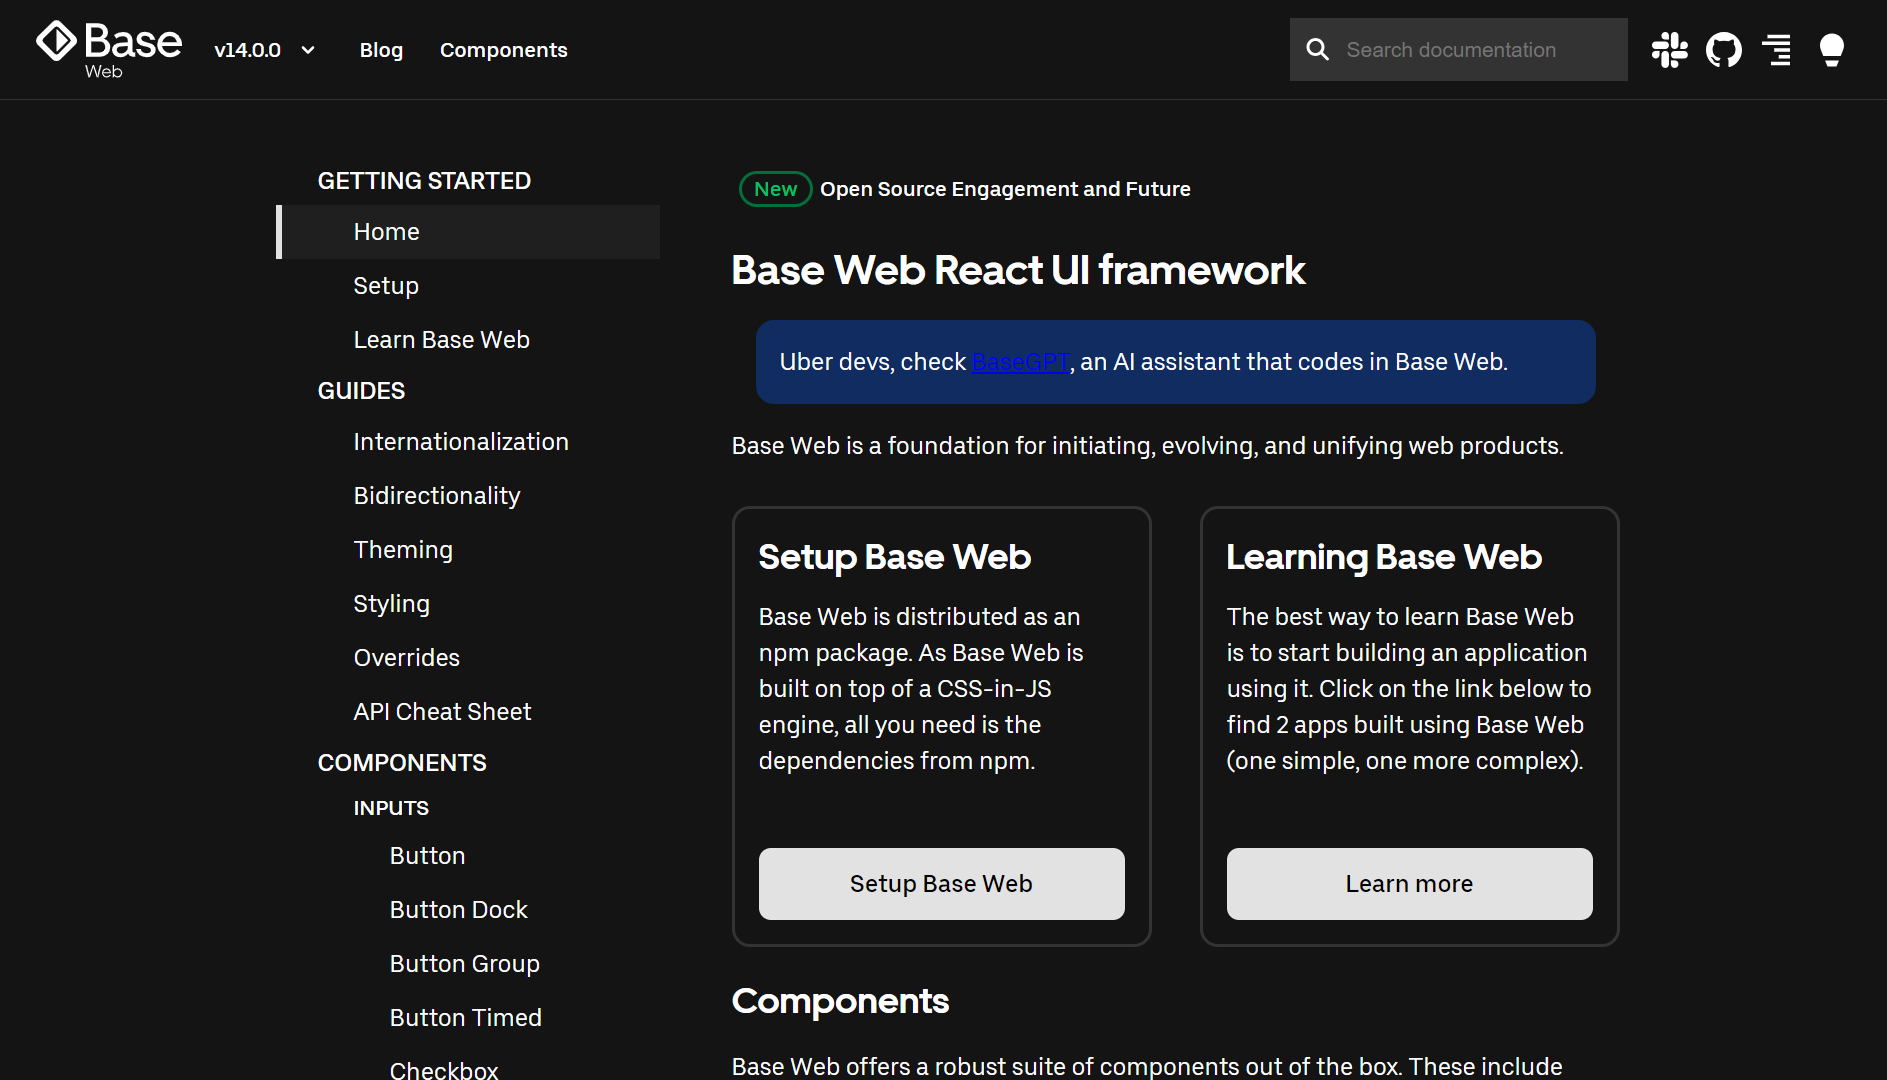 Base Web homepage